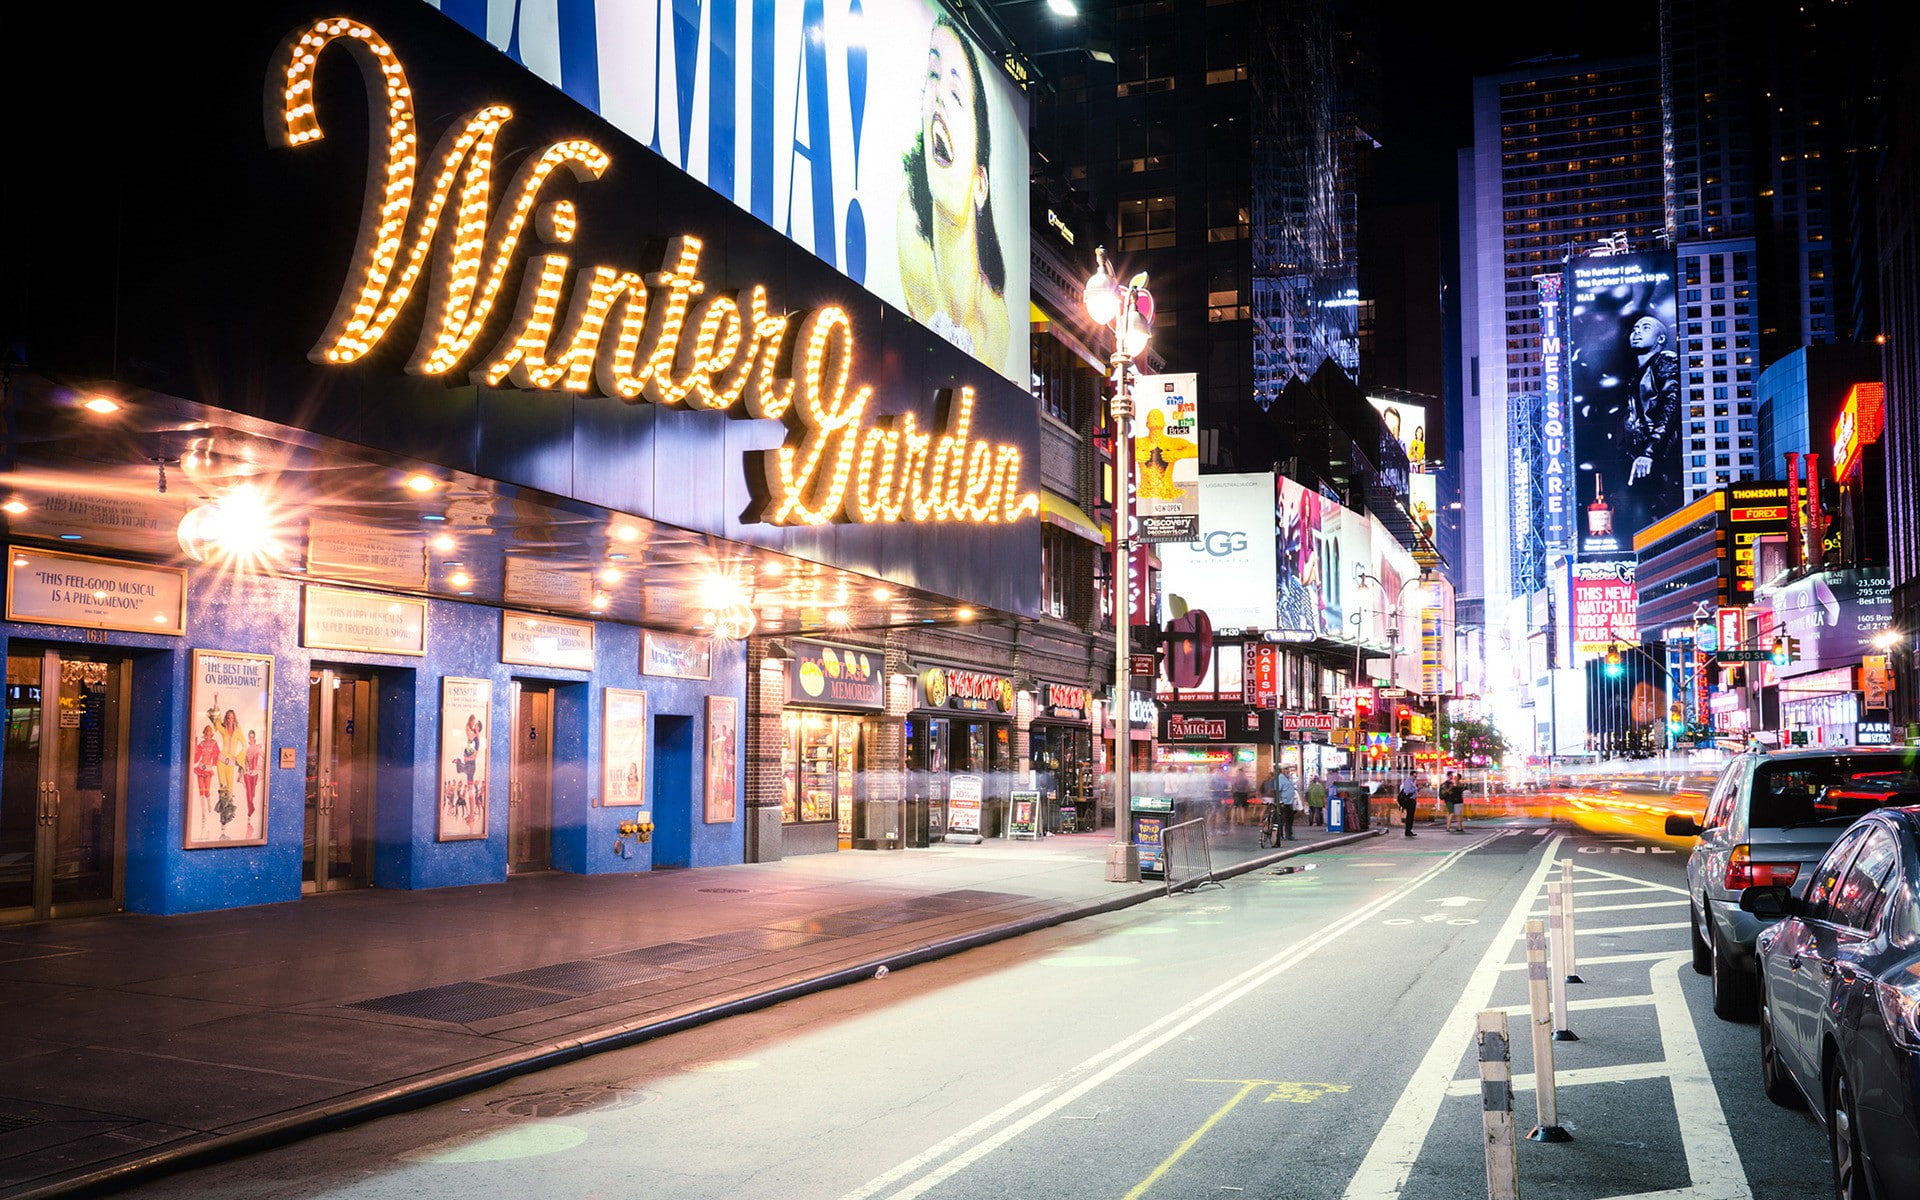 USA, New York City, Winter Garden Theatre, the street lights